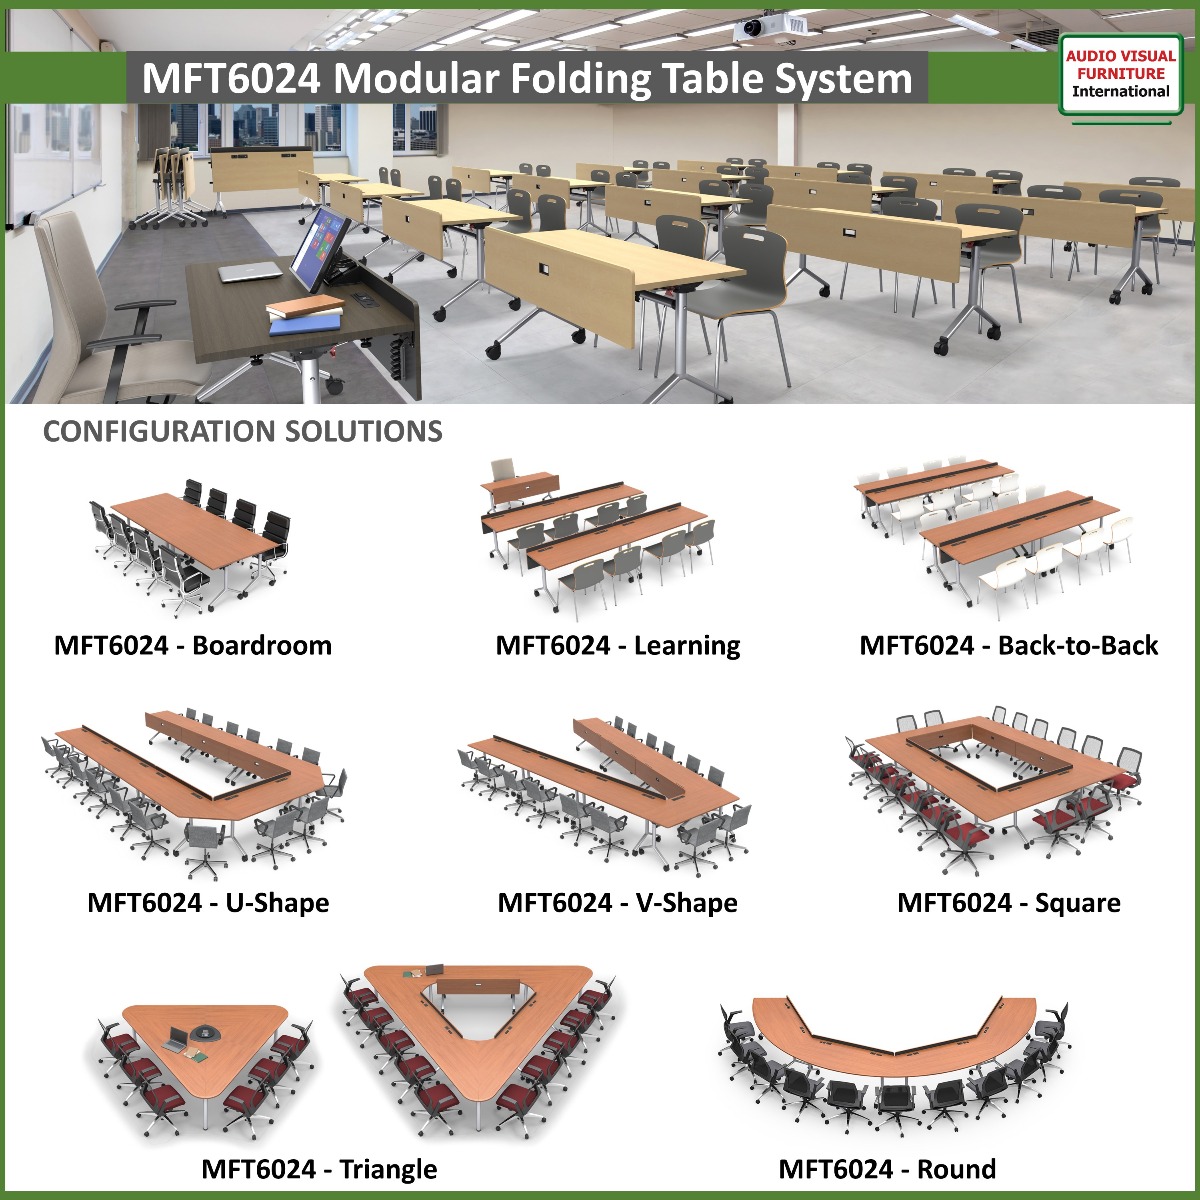 MFT6024 - Modular Folding Table System